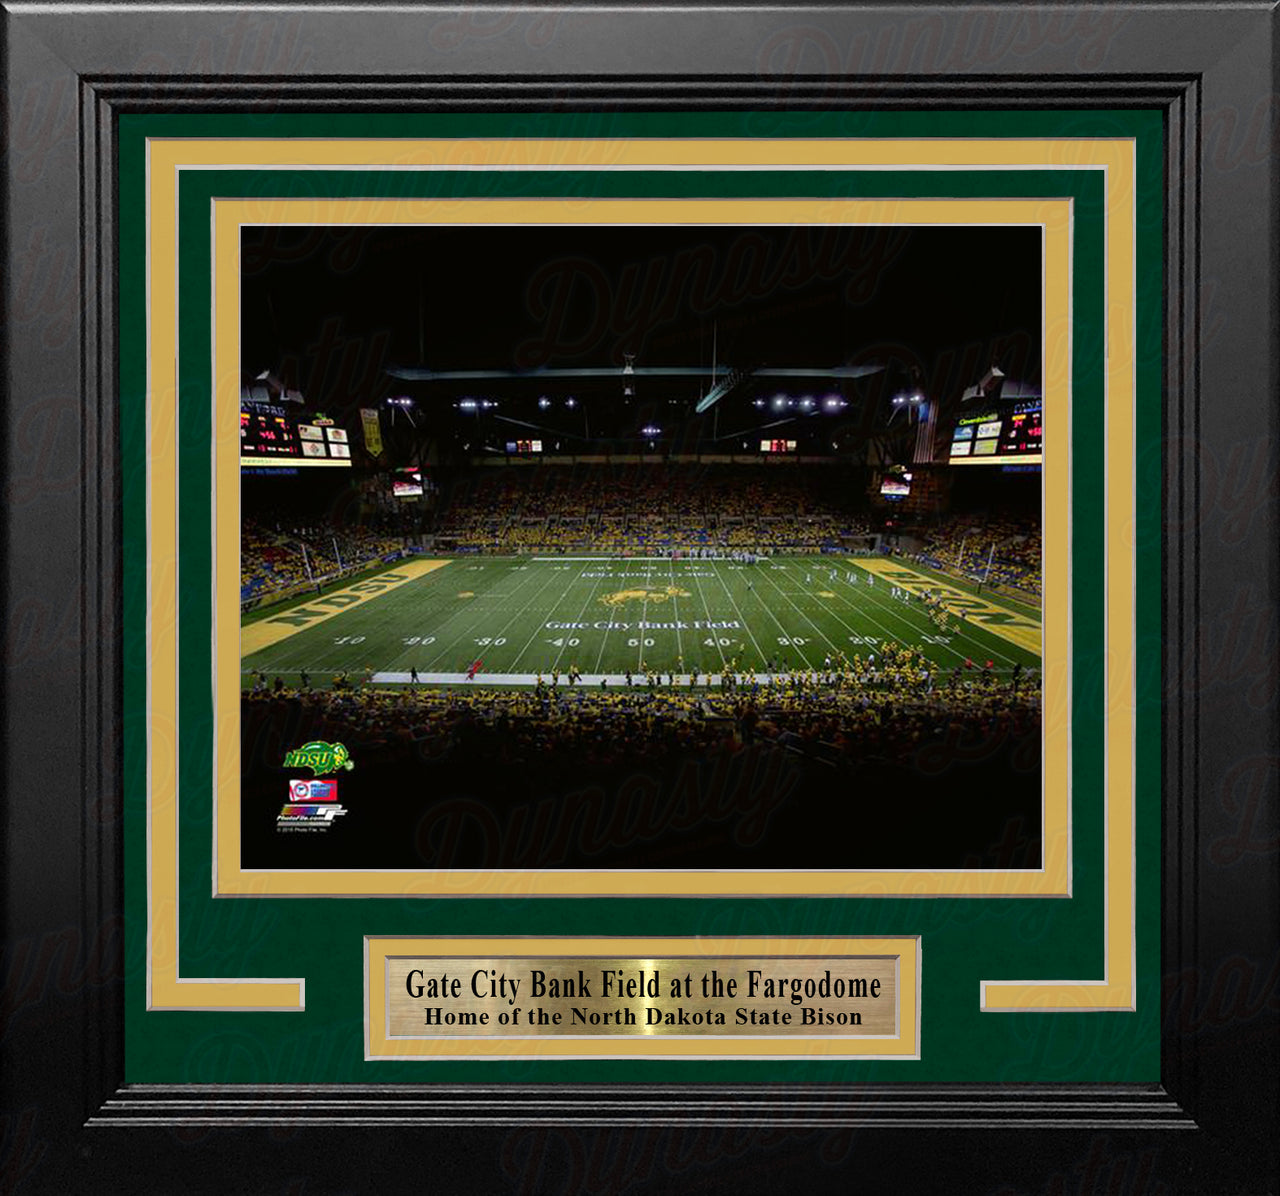 North Dakota State Bison Fargodome NCAA College Football Stadium 8" x 10" Framed and Matted Photo